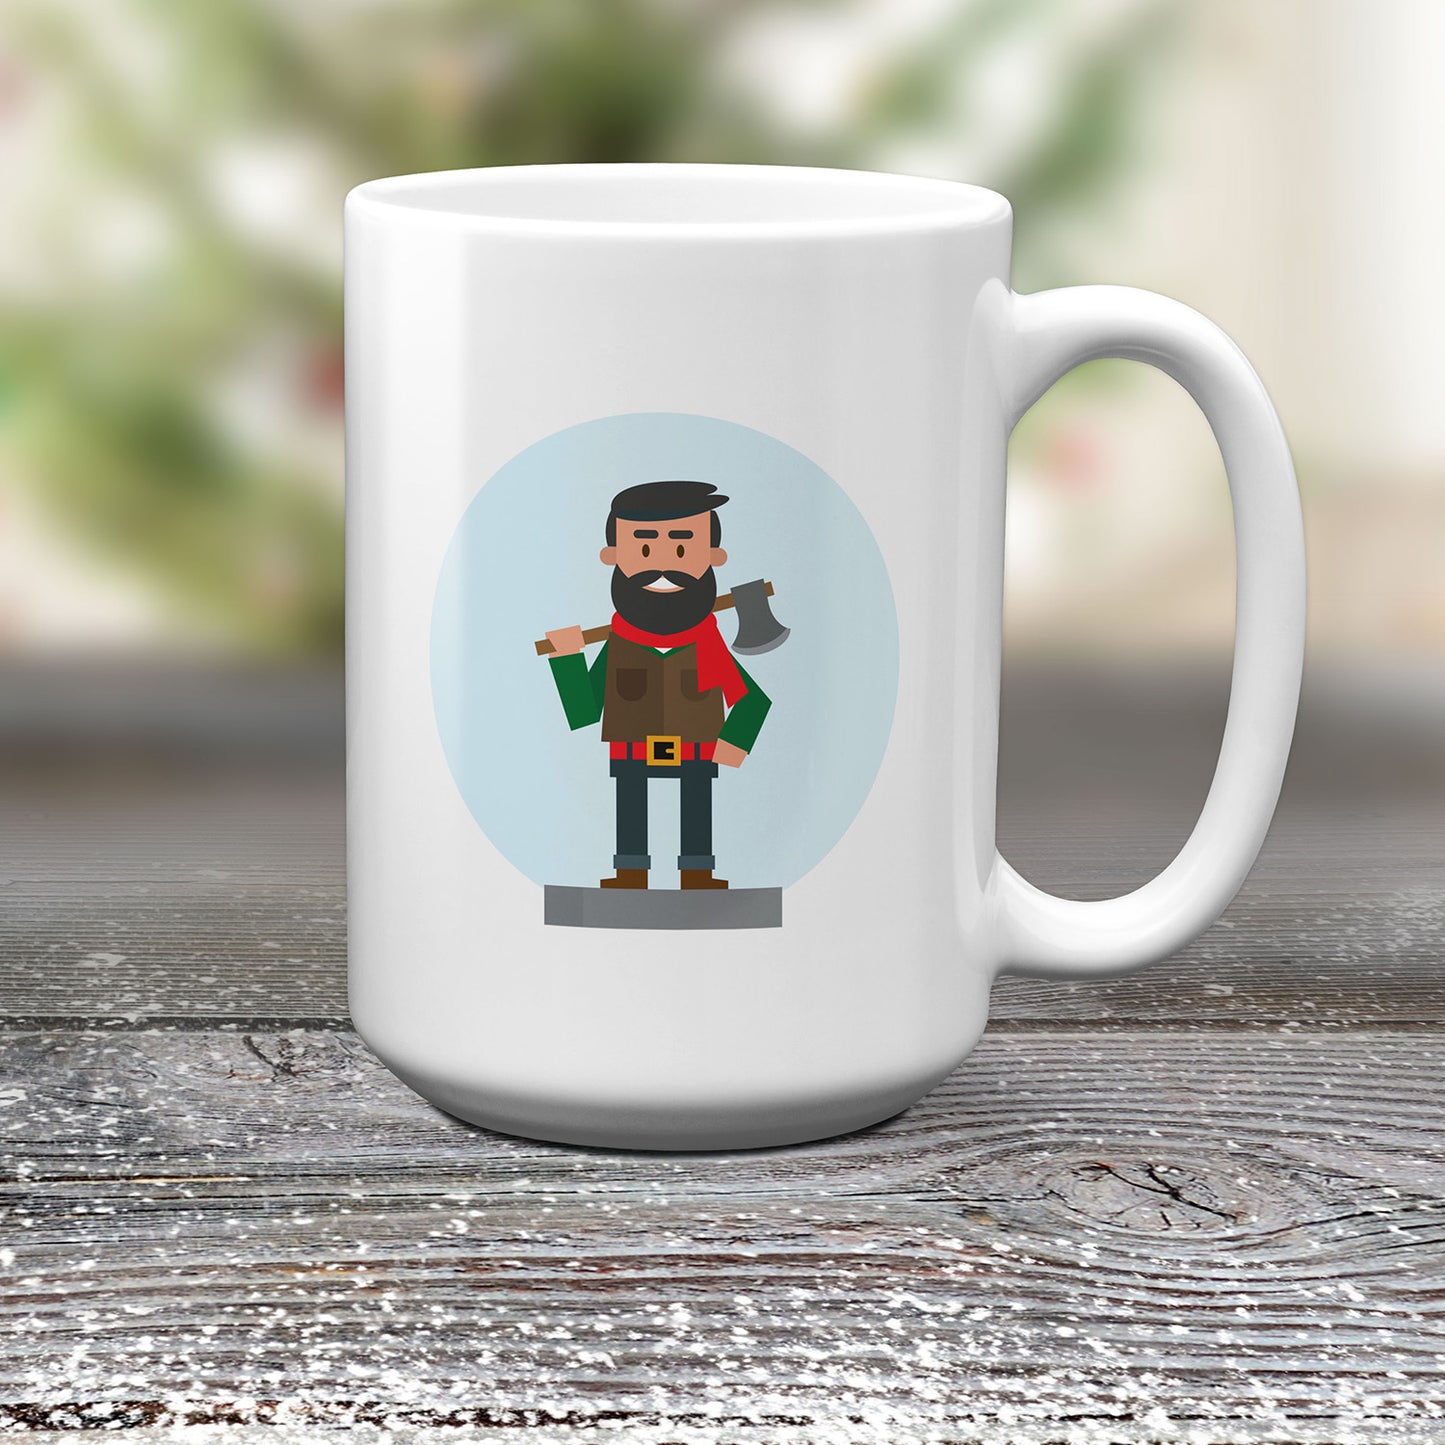 Winter Lumberjack Mug, Novelty Mugs by Smirkantile